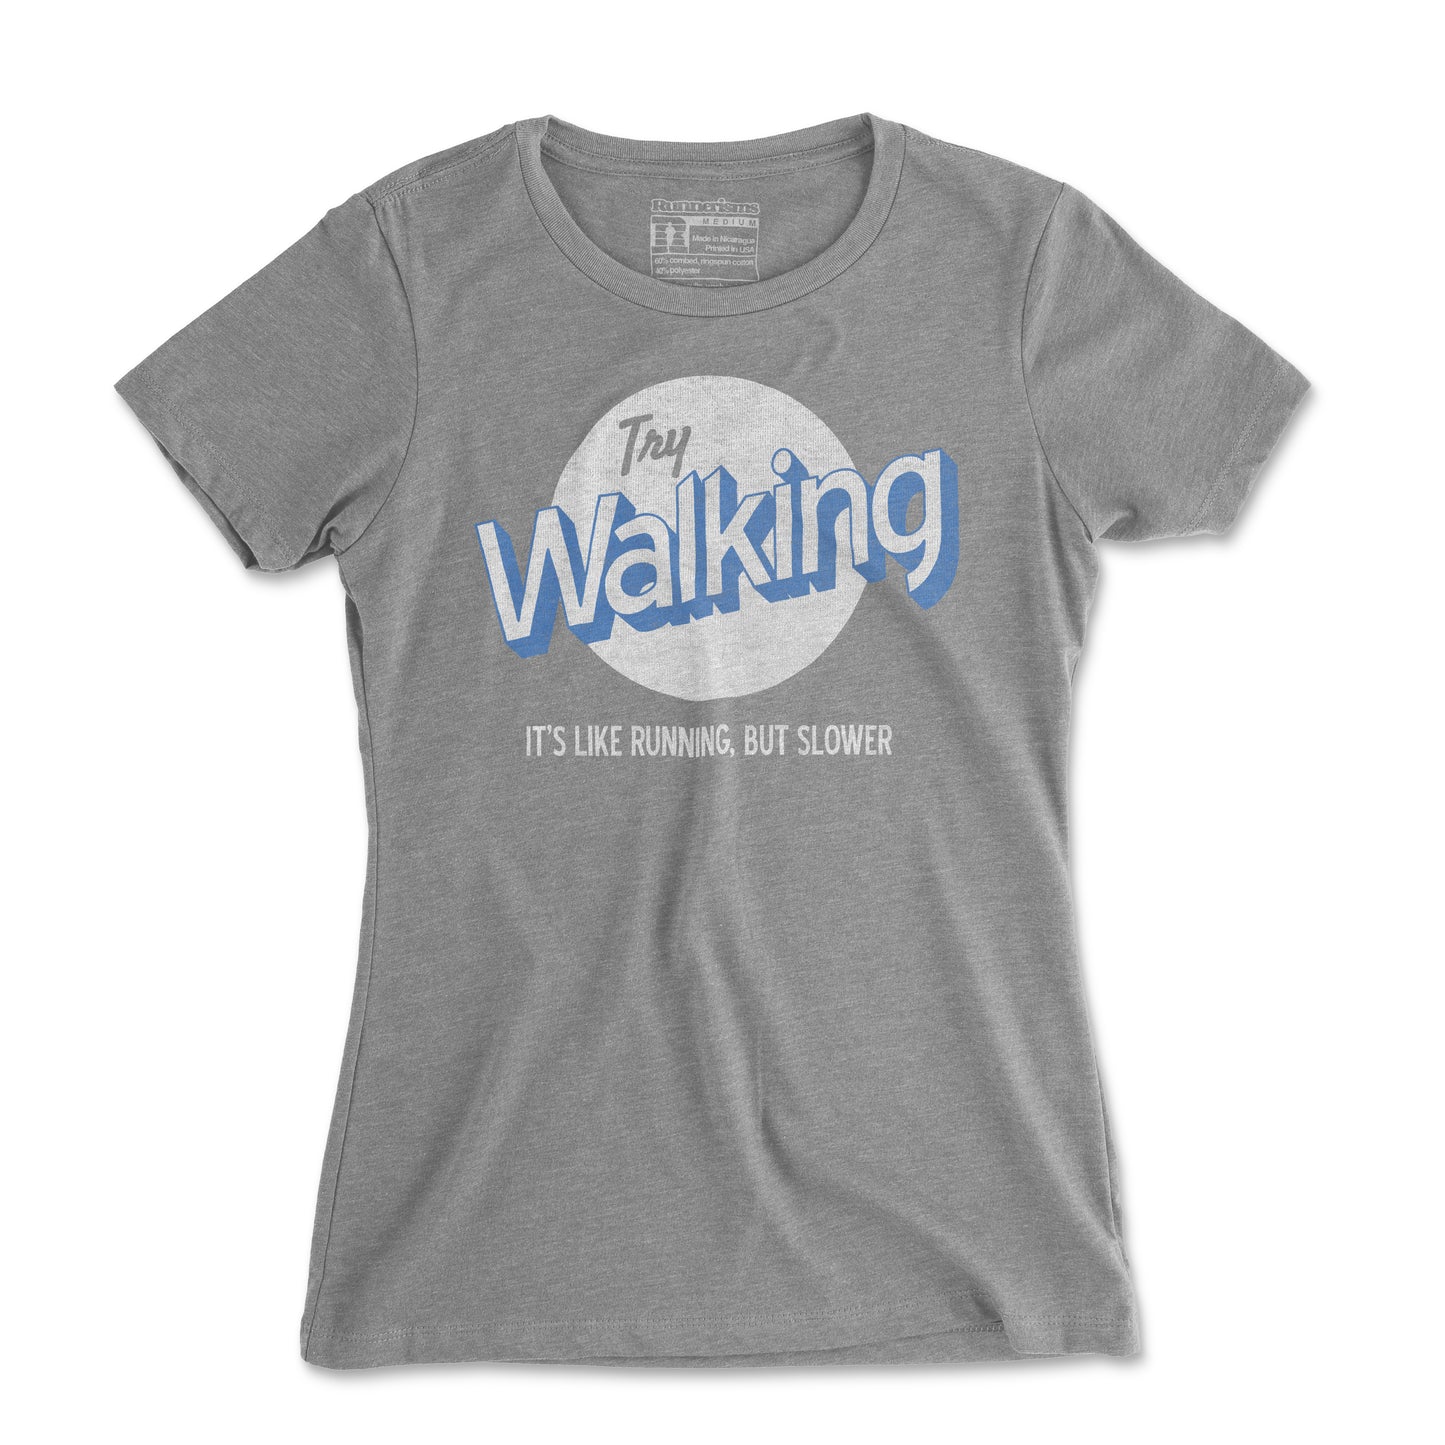 Try Walking It's Like Running But Slower - Women's T Shirt